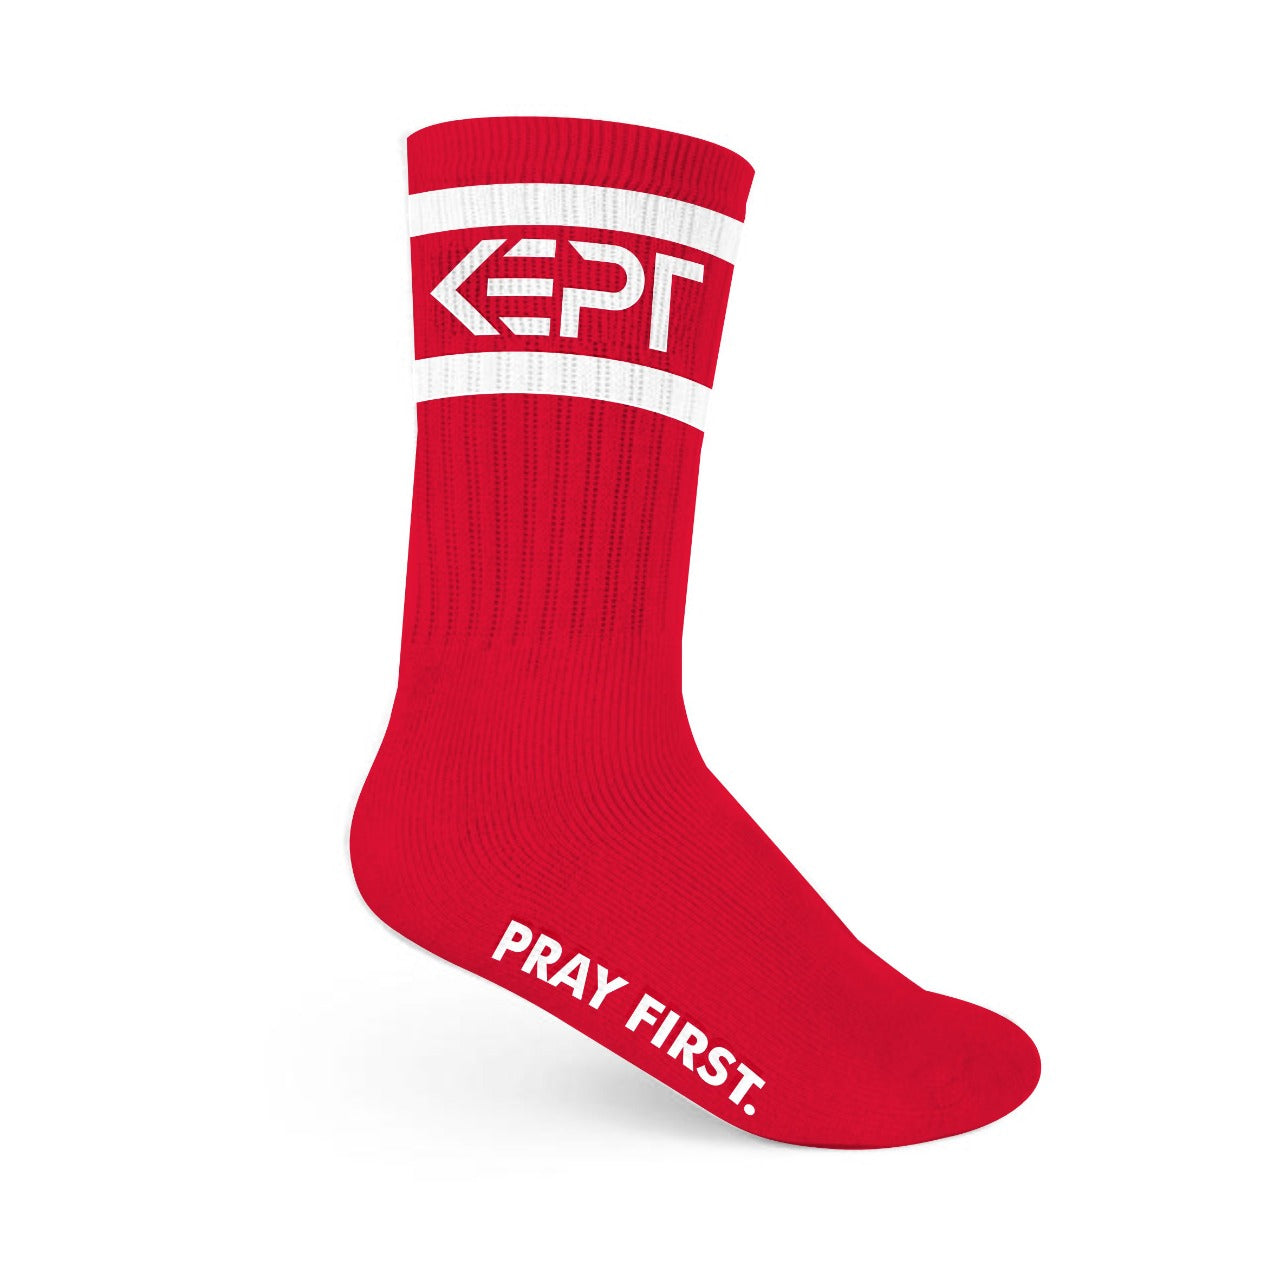 The KEPT everyday socks in red.